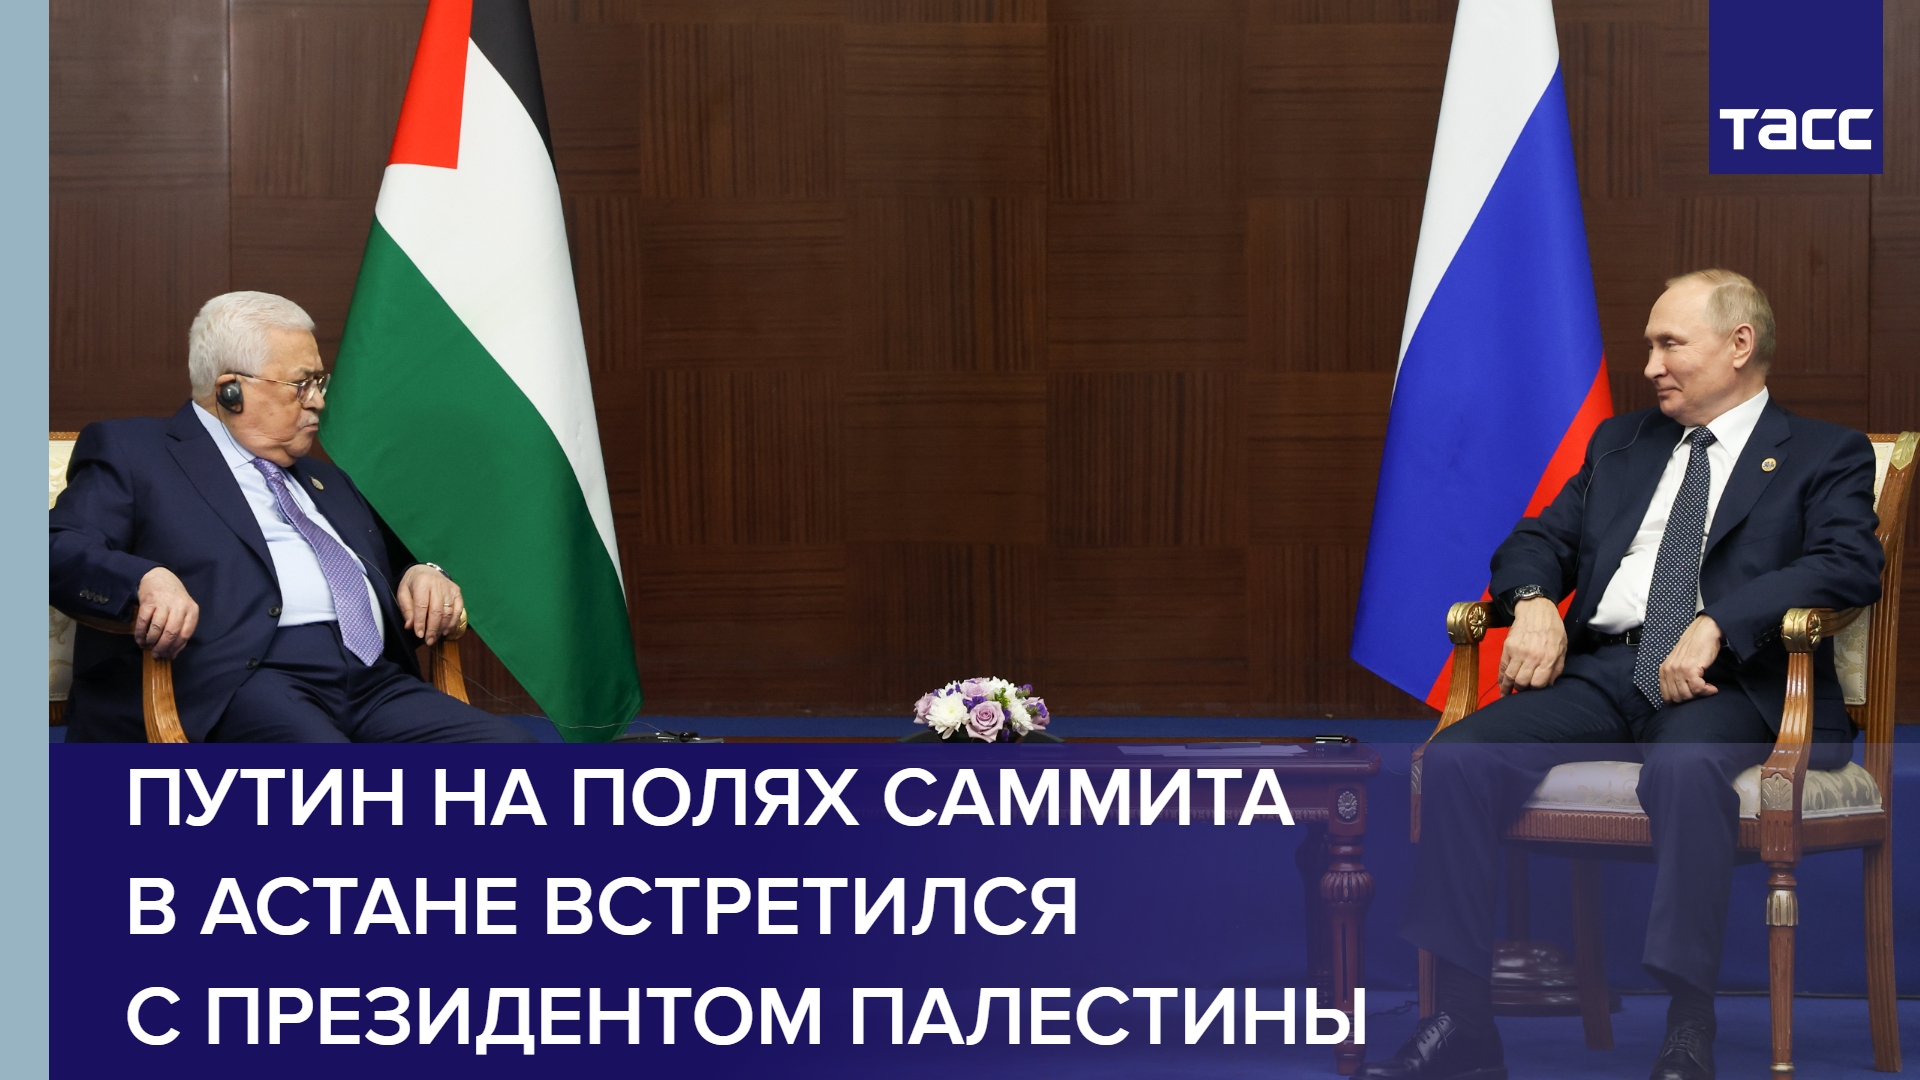 Путин на полях саммита в Астане встретился с президентом Палестины